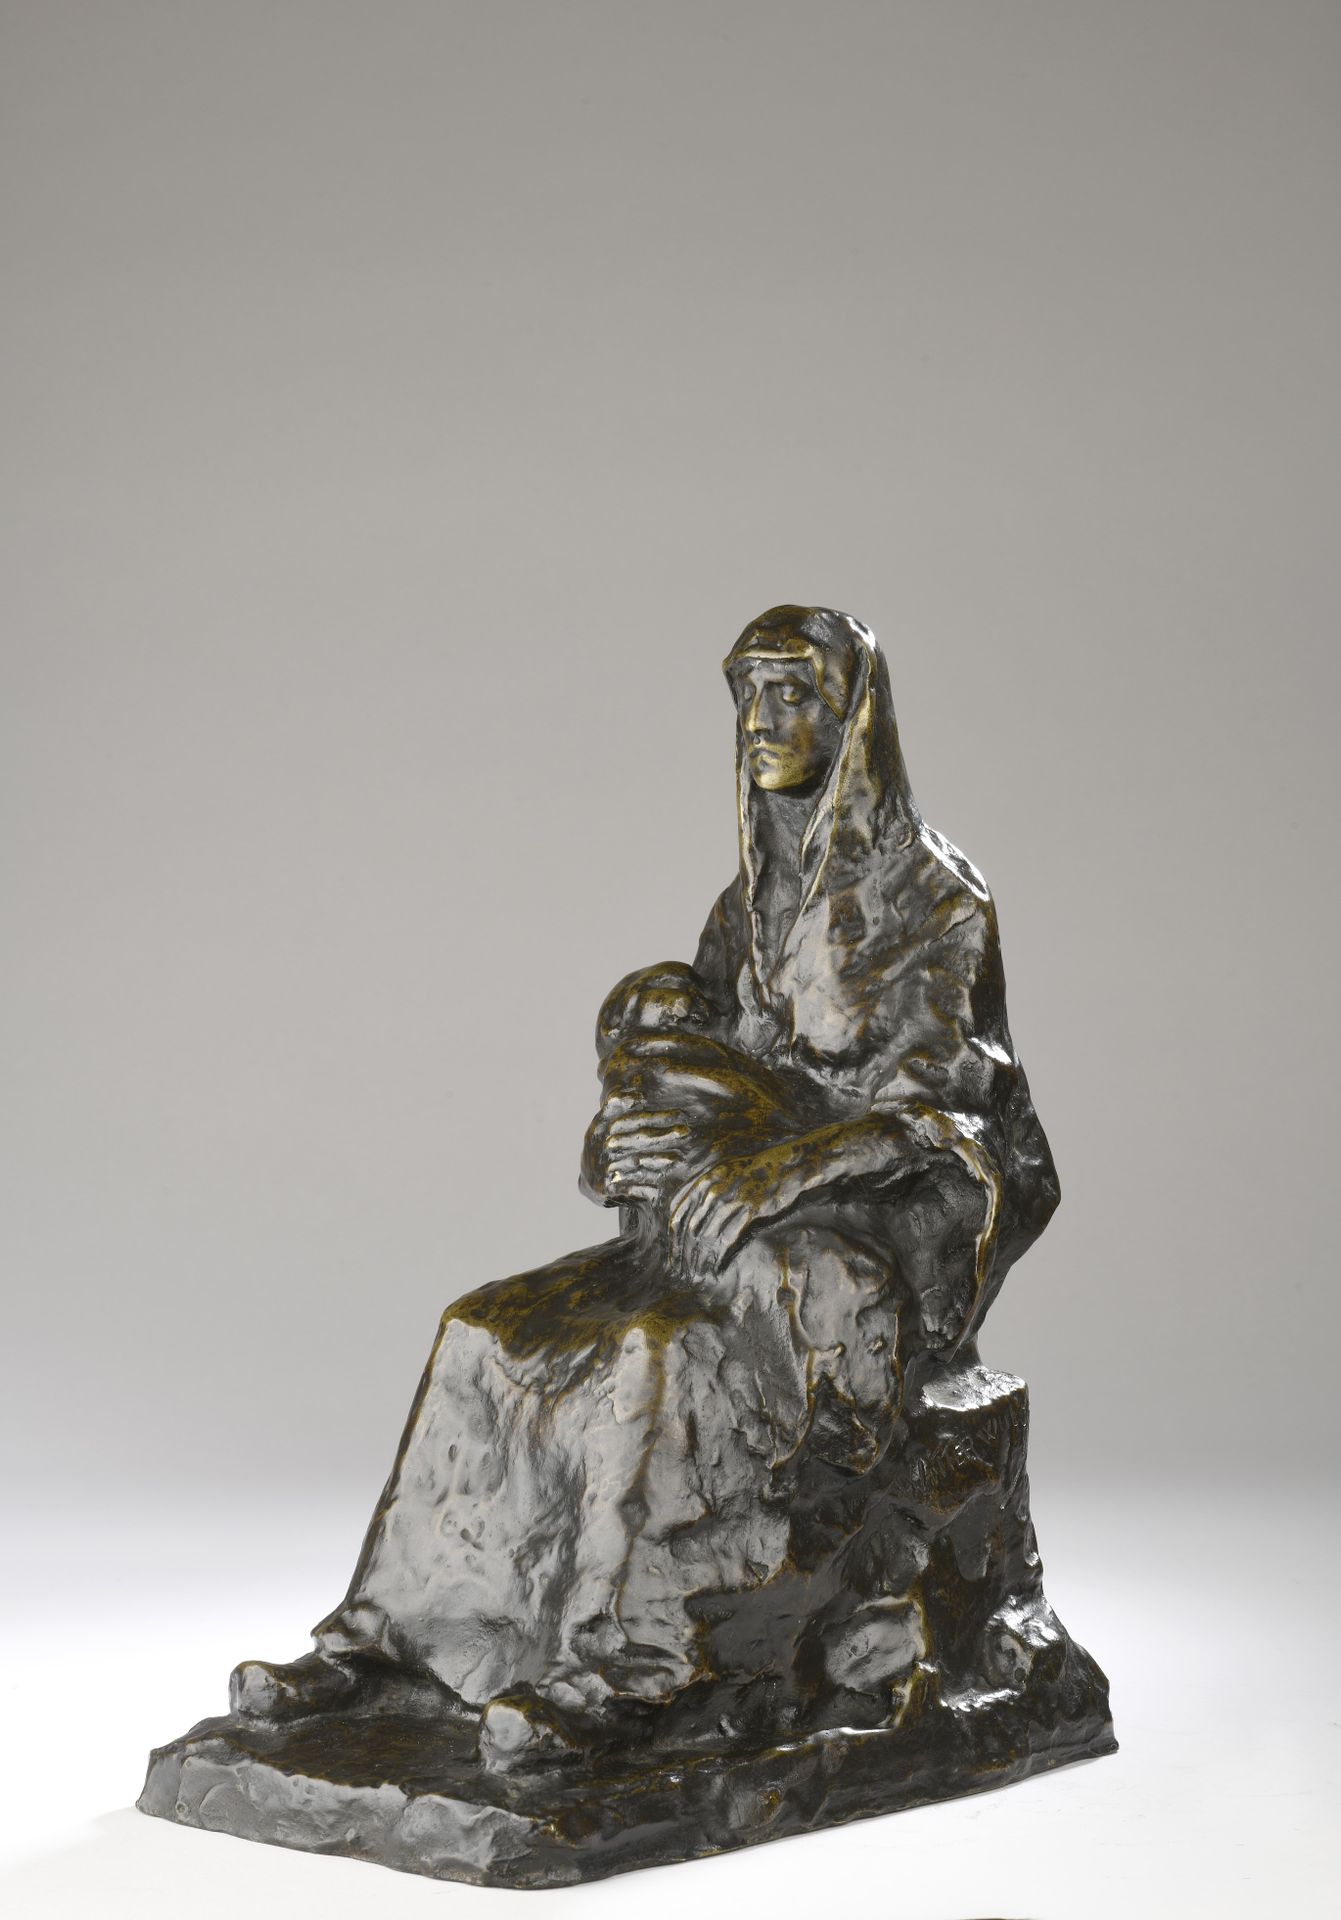 Null 约瑟夫-维特武格(1883-1967) 
孕妇
棕色铜锈的青铜器
平台上有 "Witterwulghe "的签名
H.31厘米